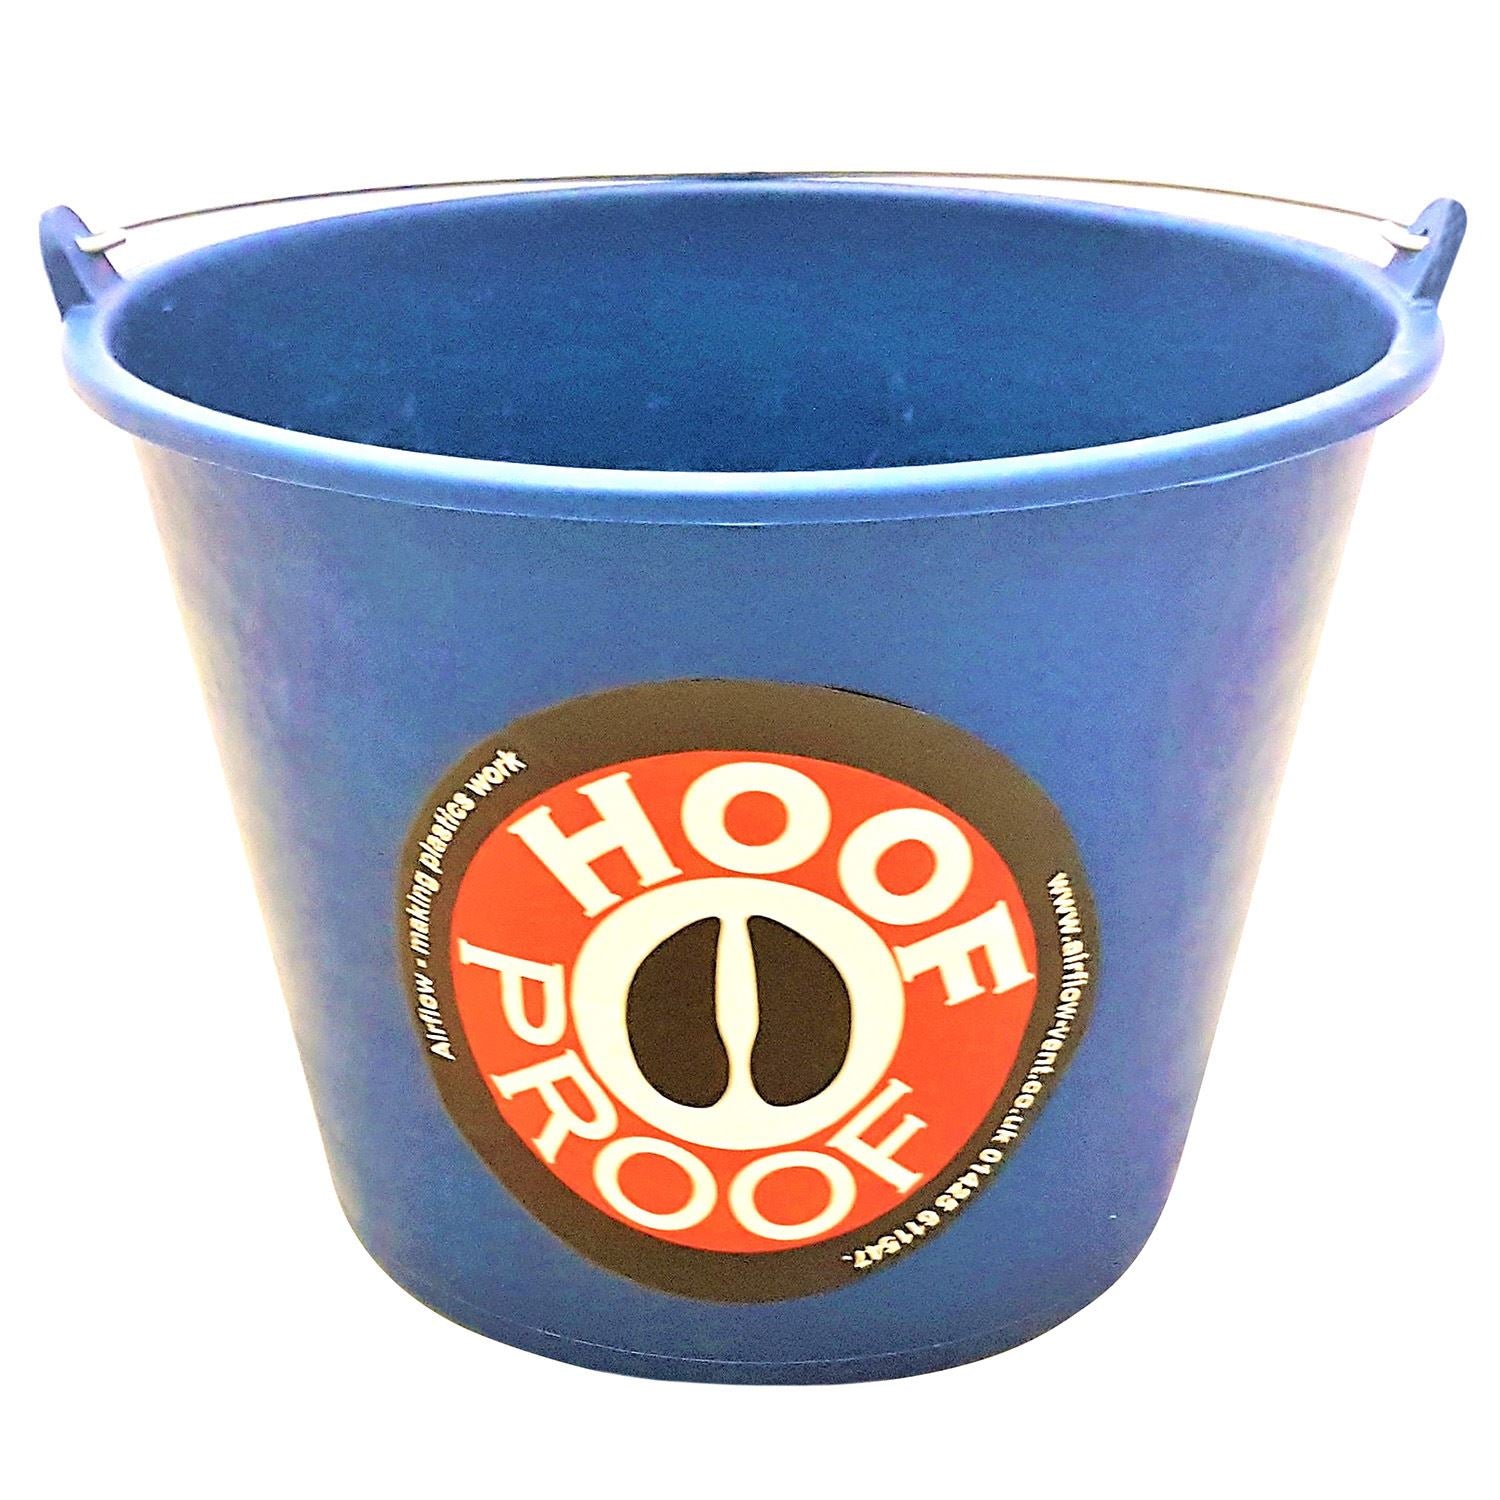 Hoof Proof Calf/Multi Purpose Bucket - Just Horse Riders